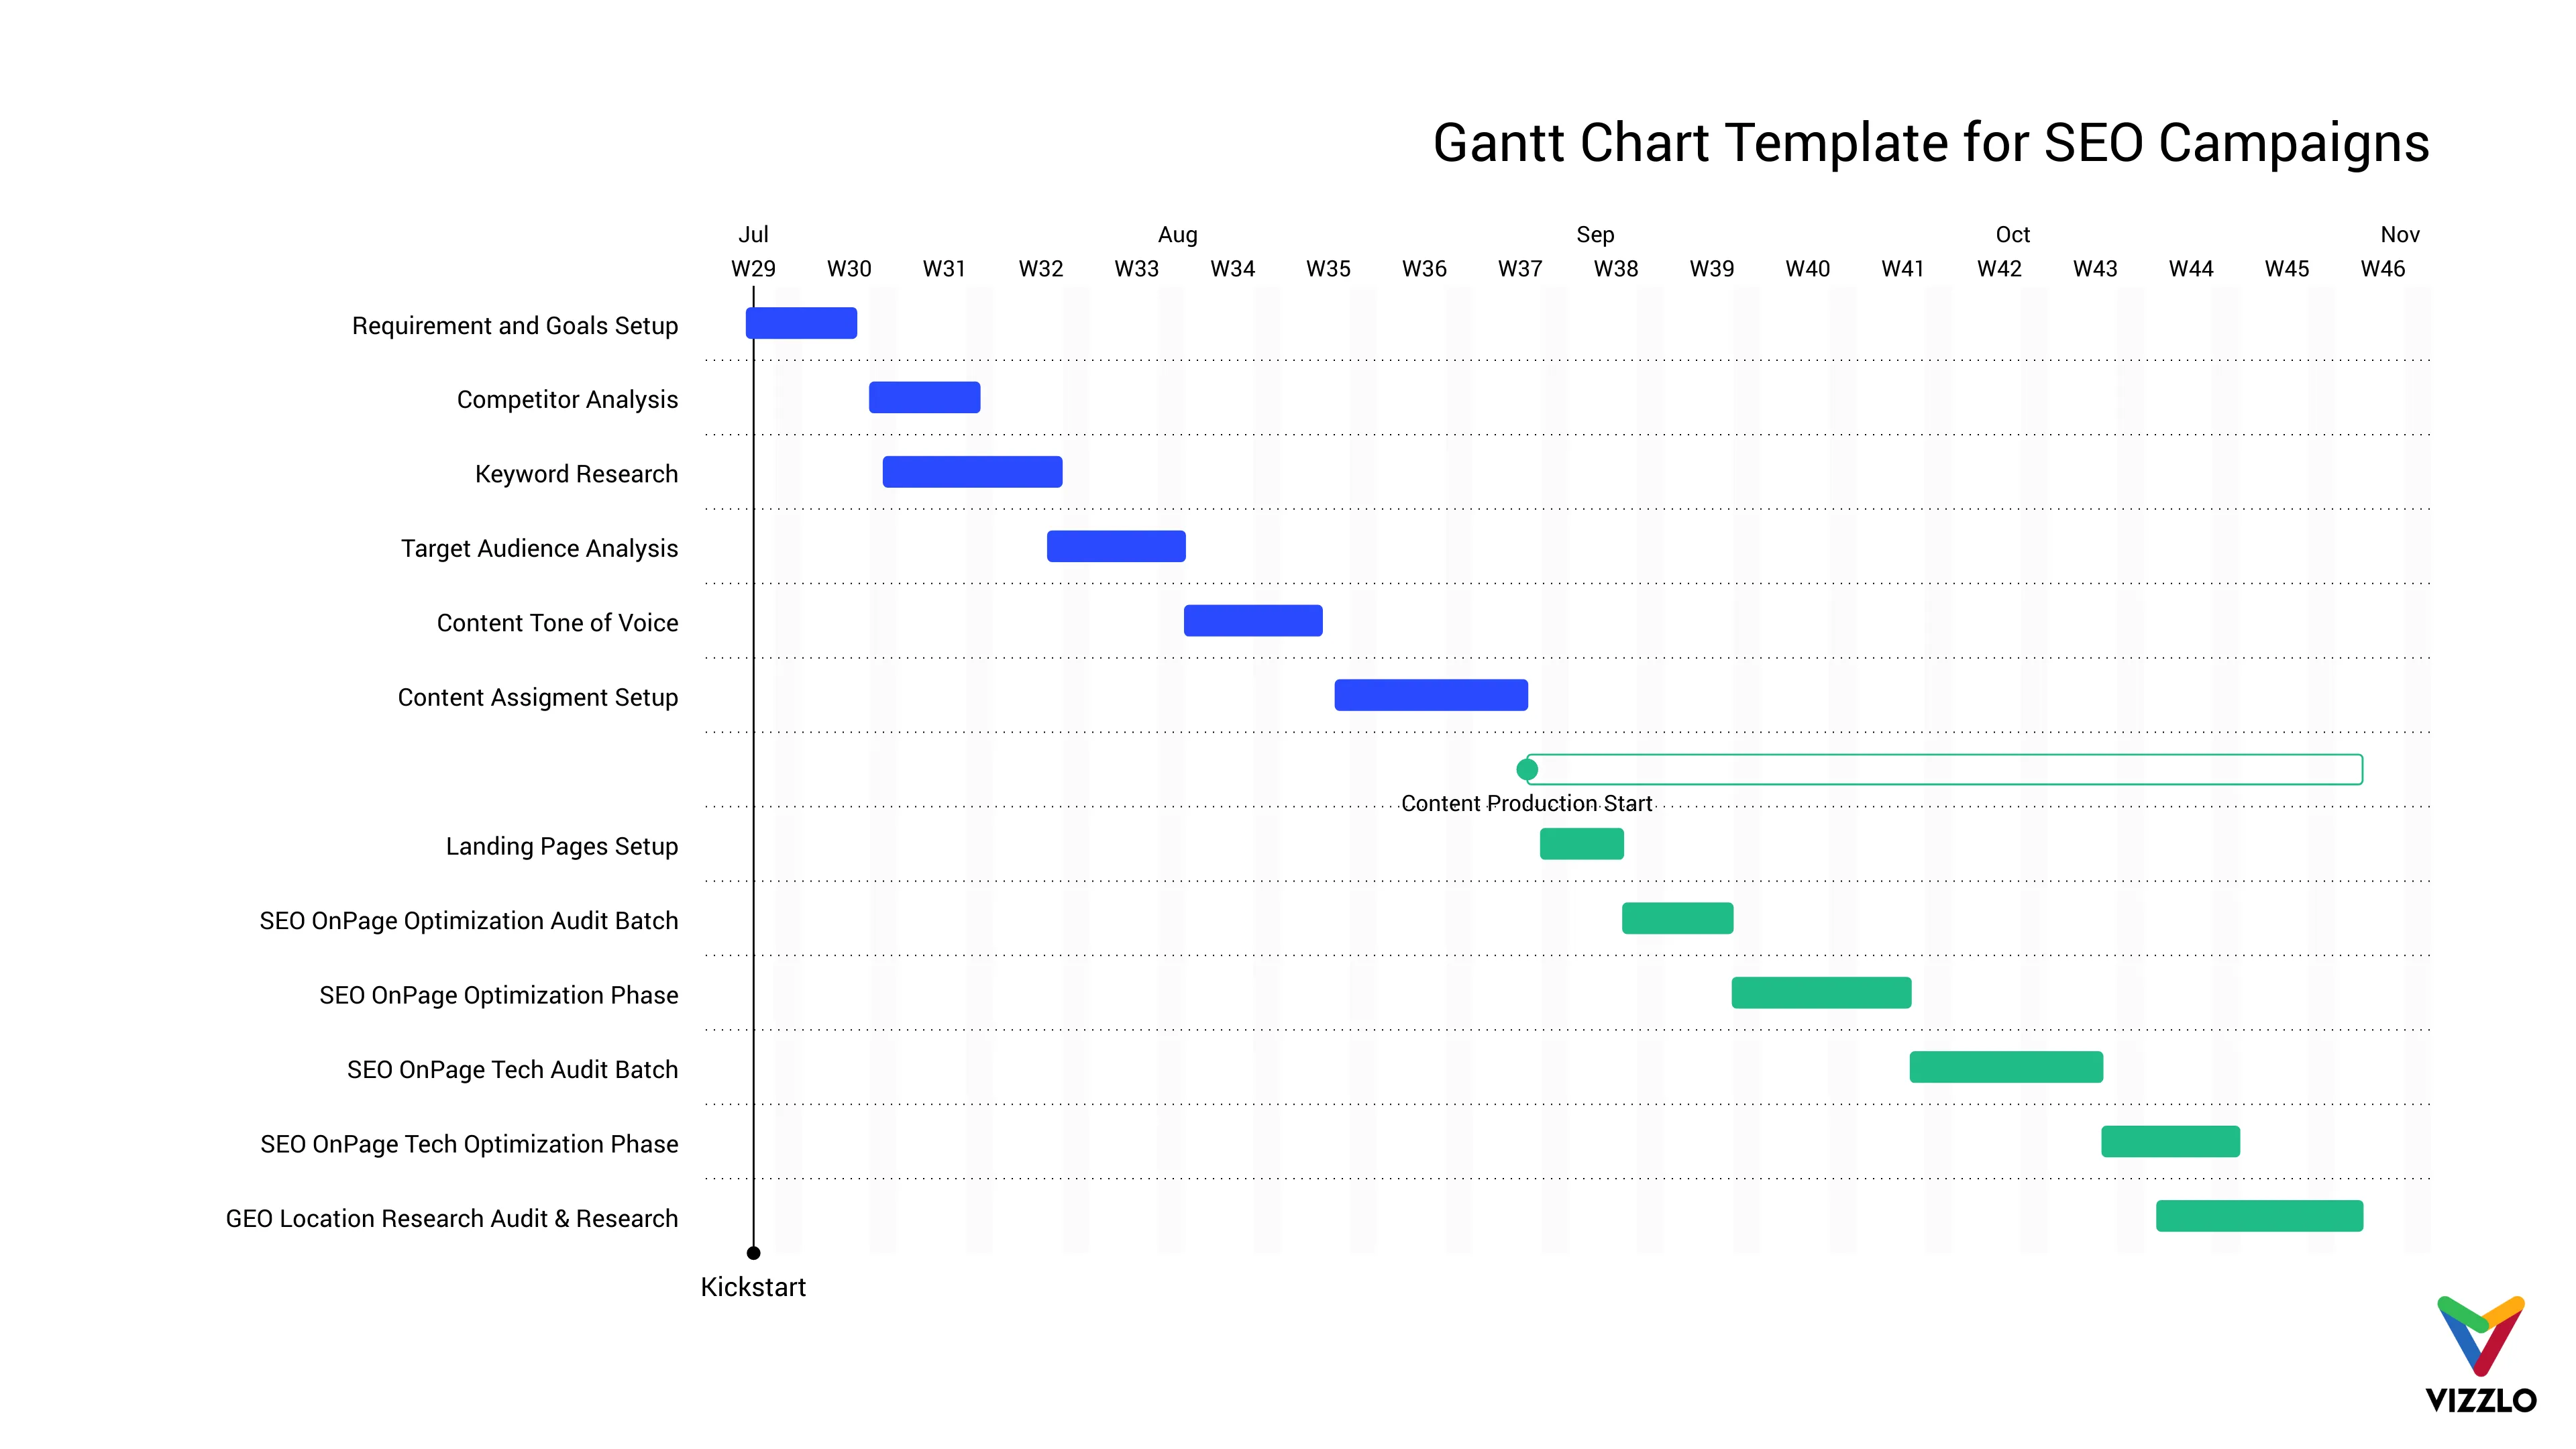 Gantt Chart example: Gallery